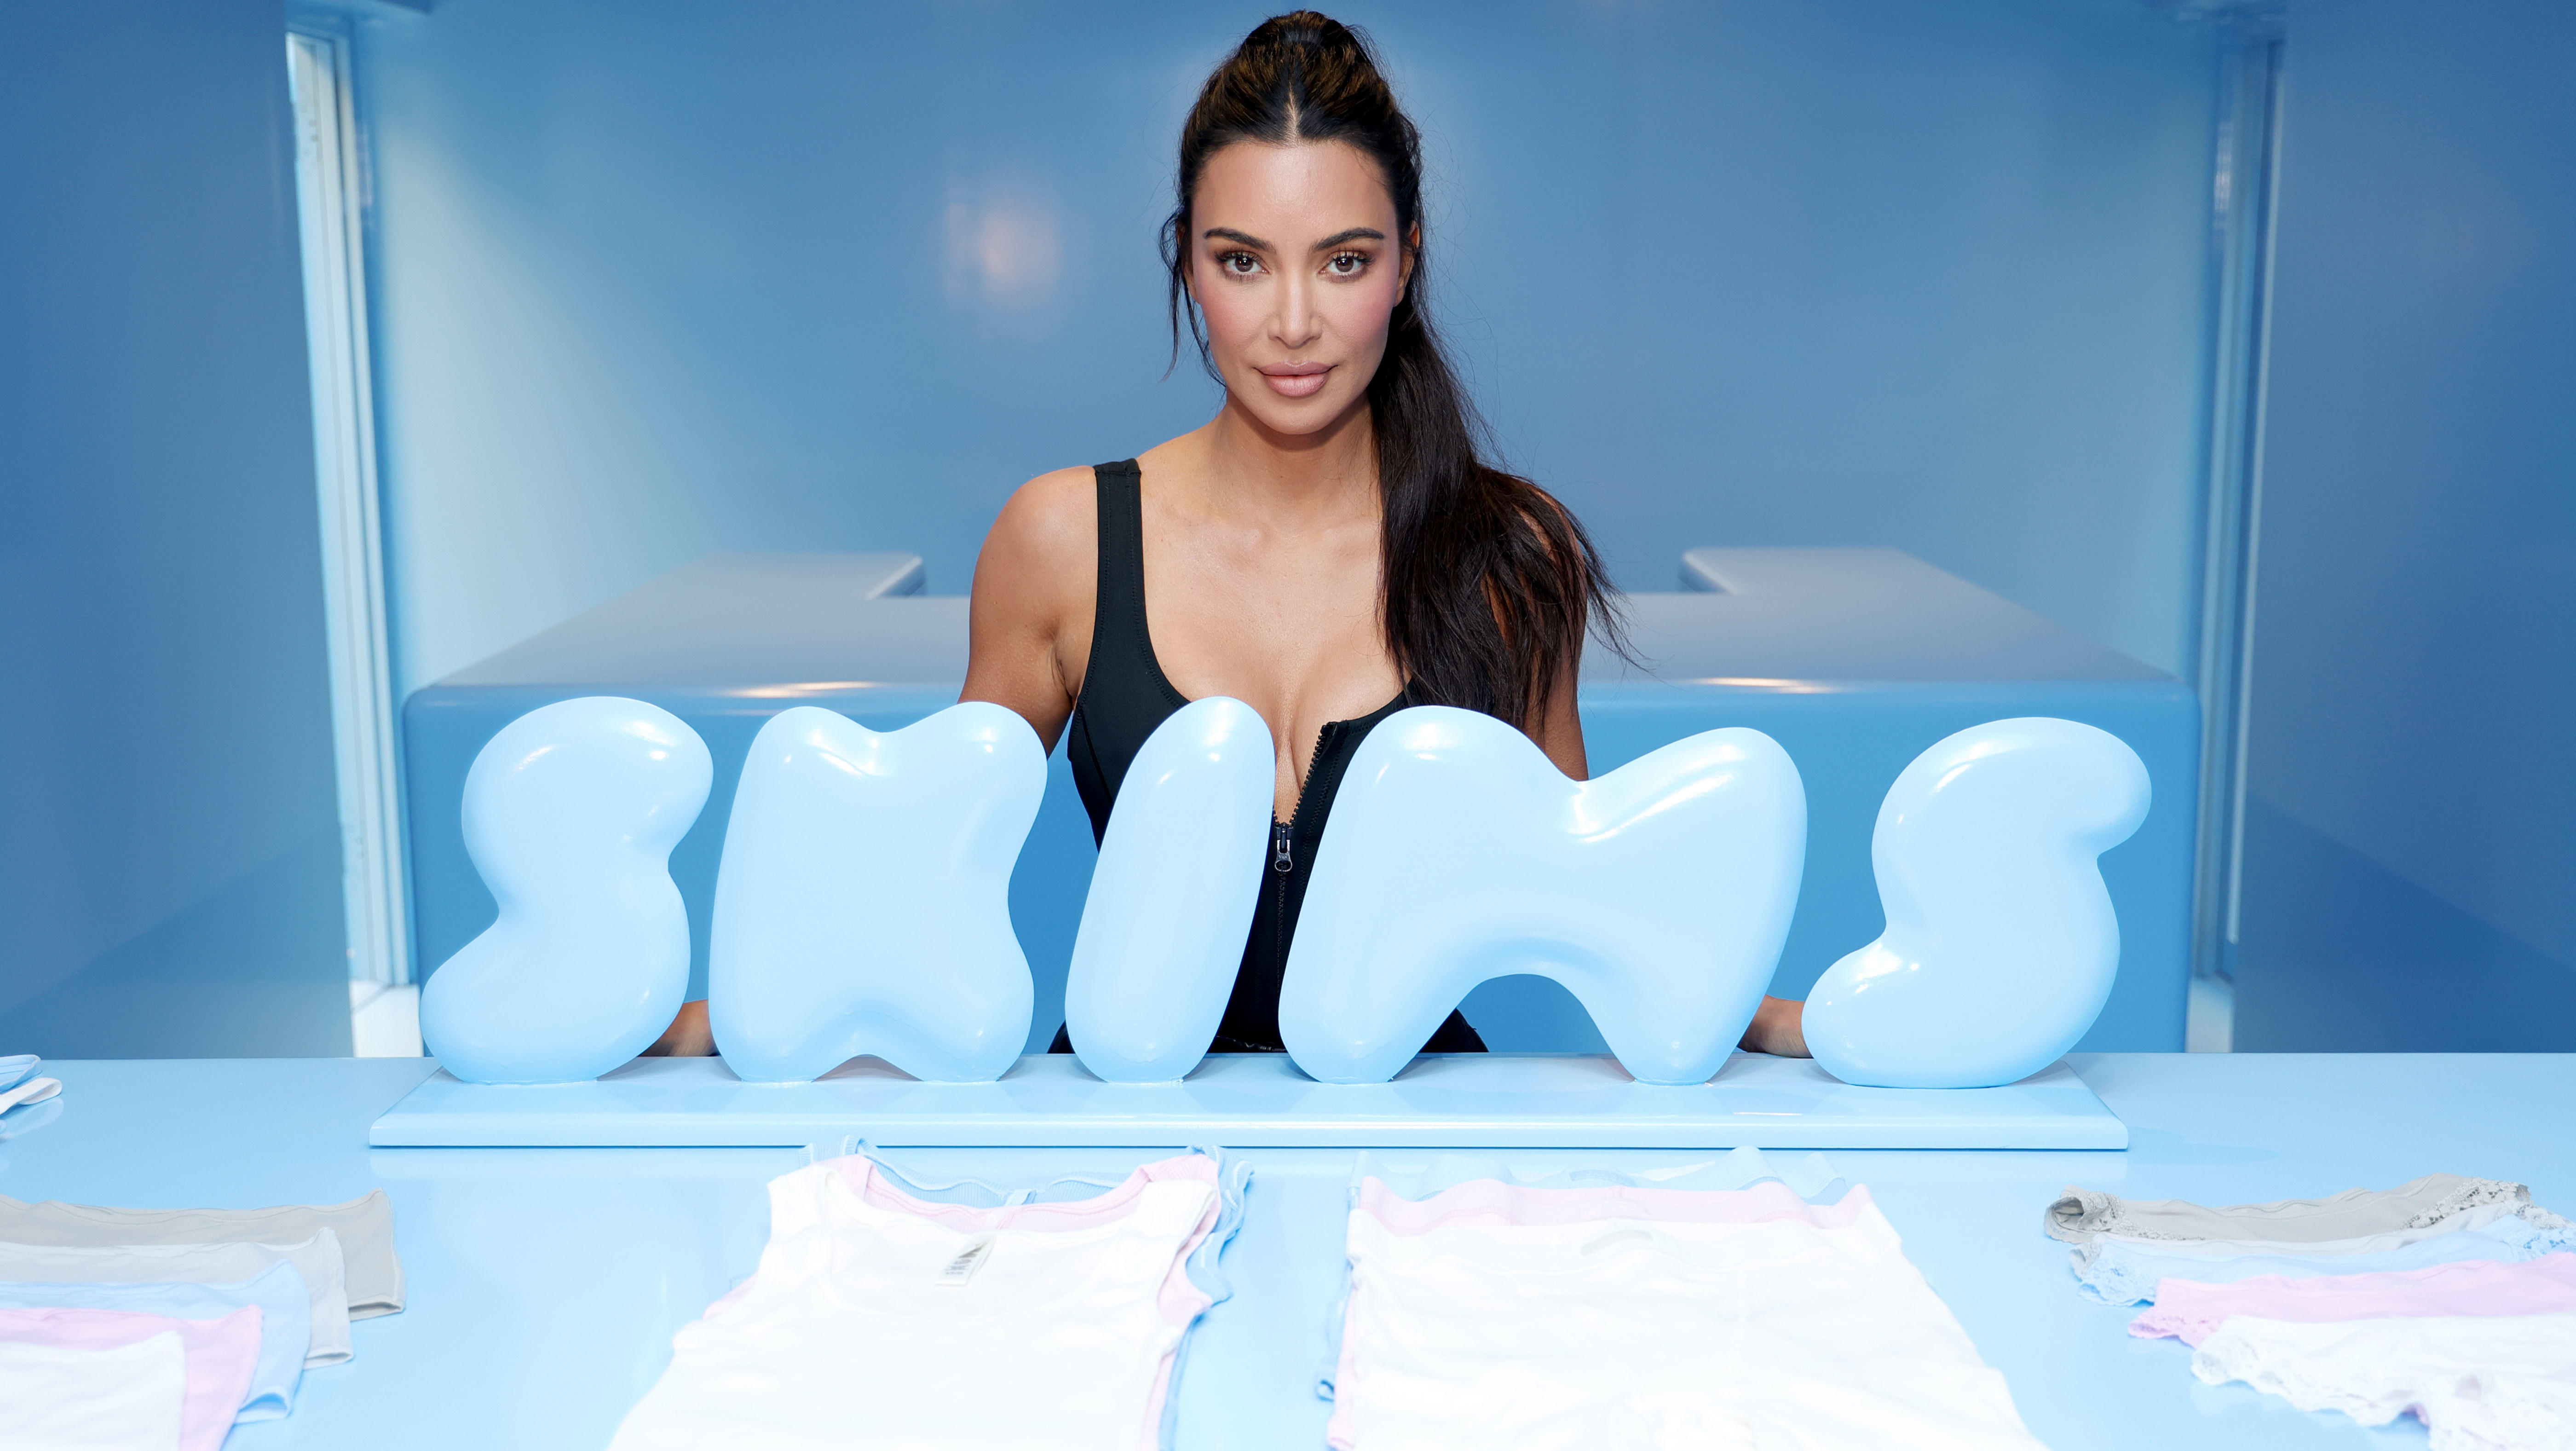 Kim Kardashian's Clothing Line Raises Money at $4B Valuation